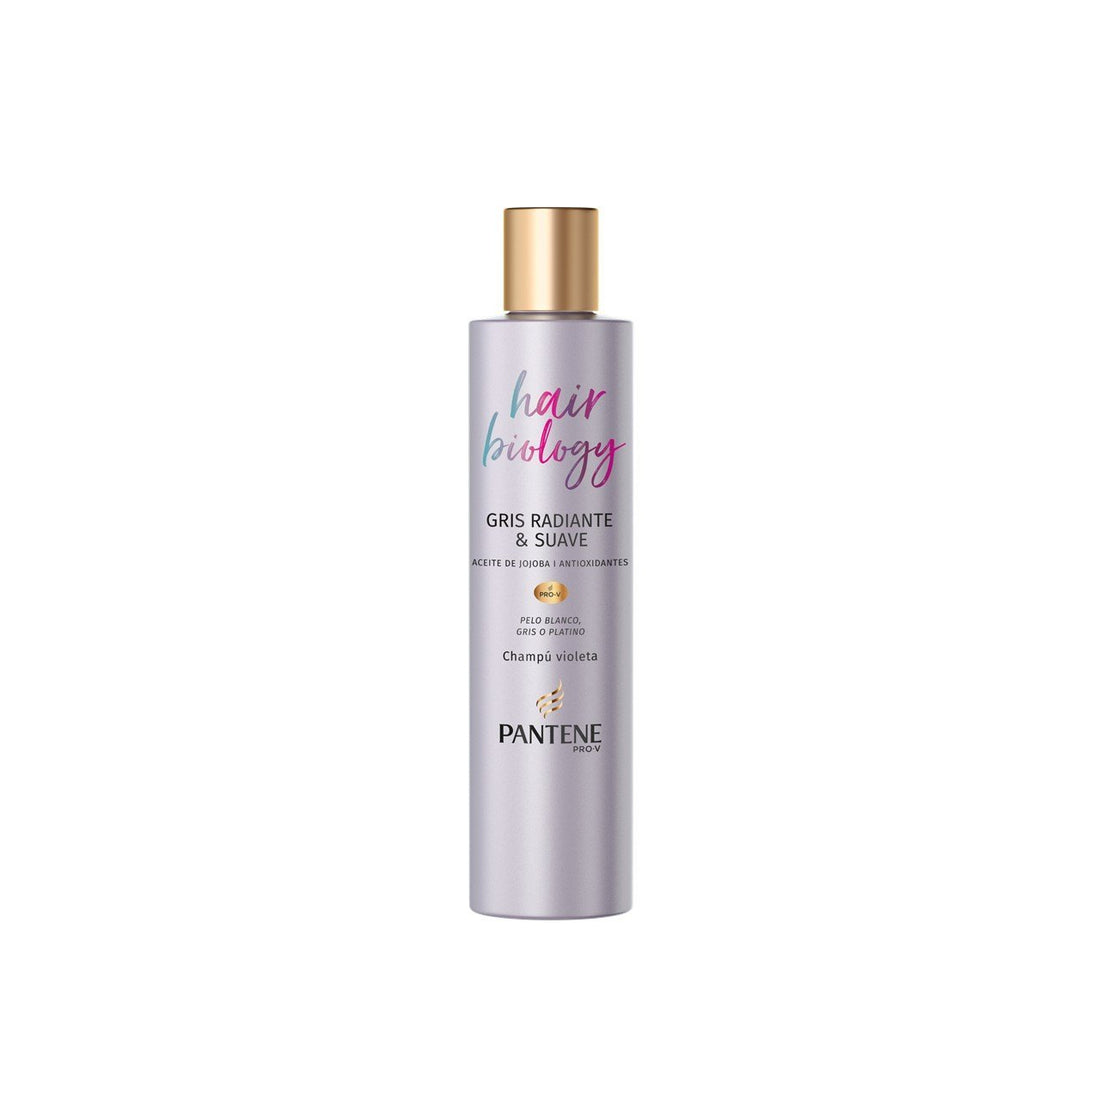 Pantene Pro-V Hair Biology Shampoo cinza e brilhante 250ml